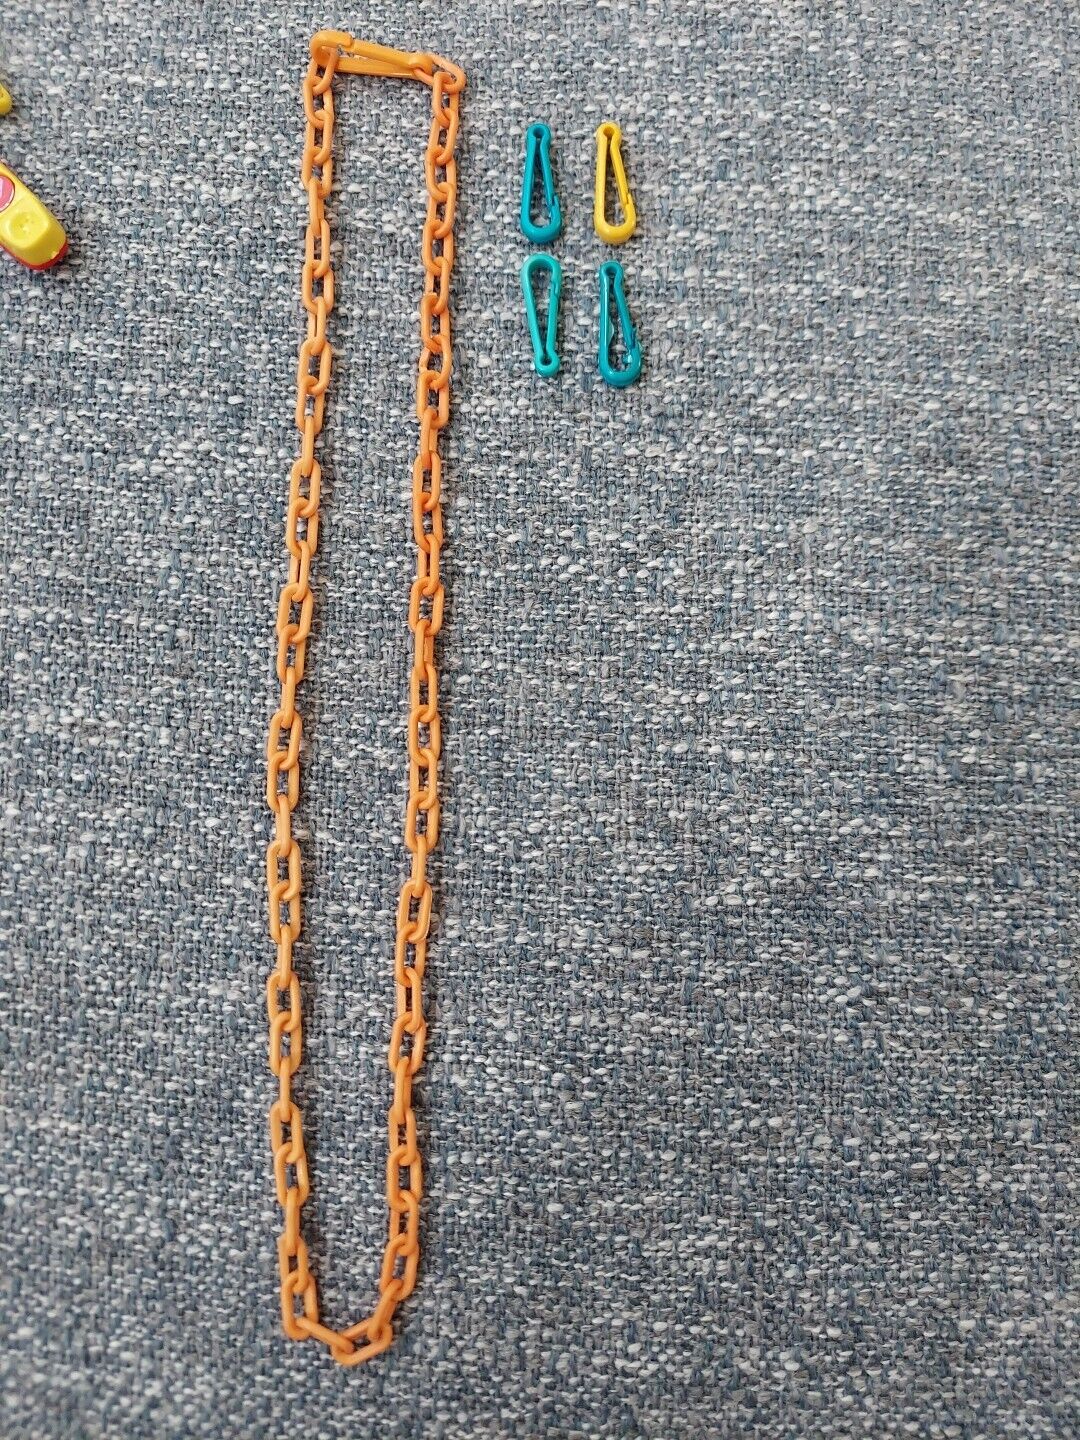 Vintage 1980s Plastic Clip On Bell Charm Chain Link Necklace Orange Blue